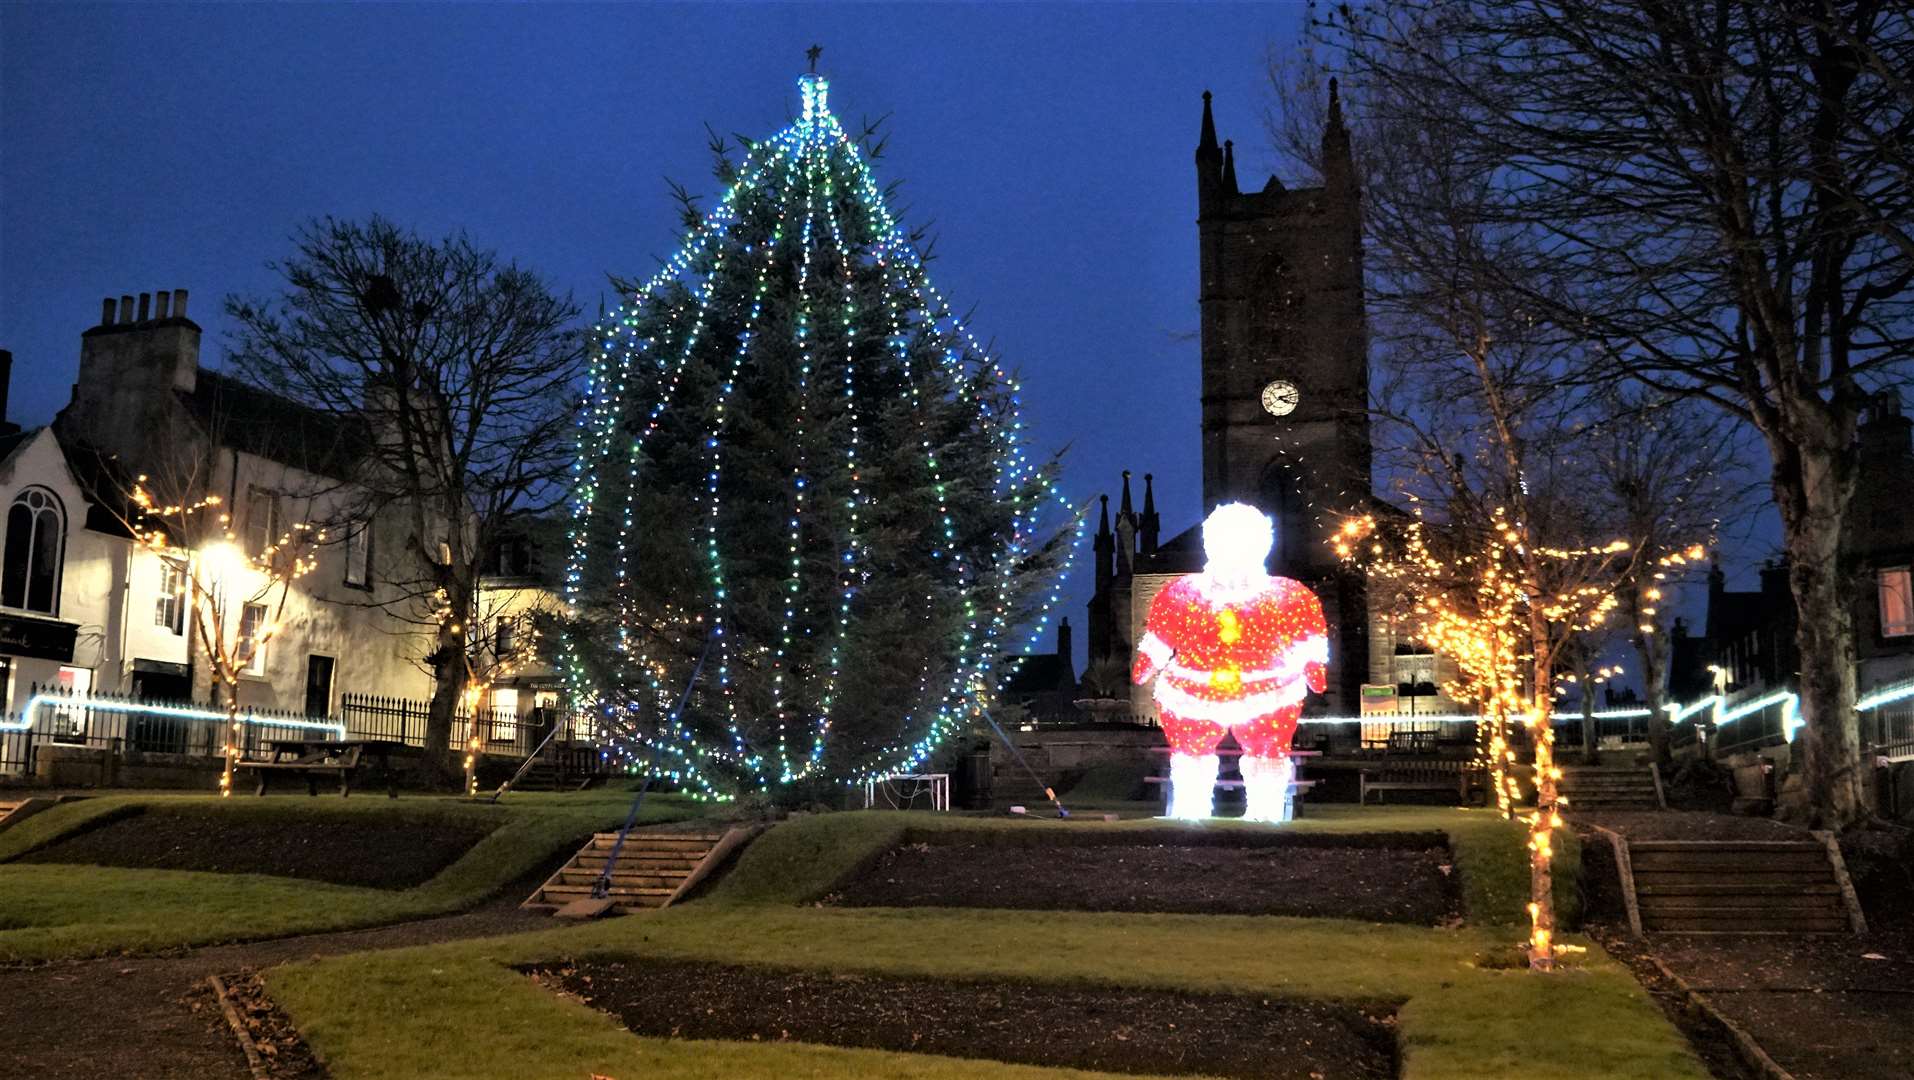 The Christmas lights at Sir John's Square.